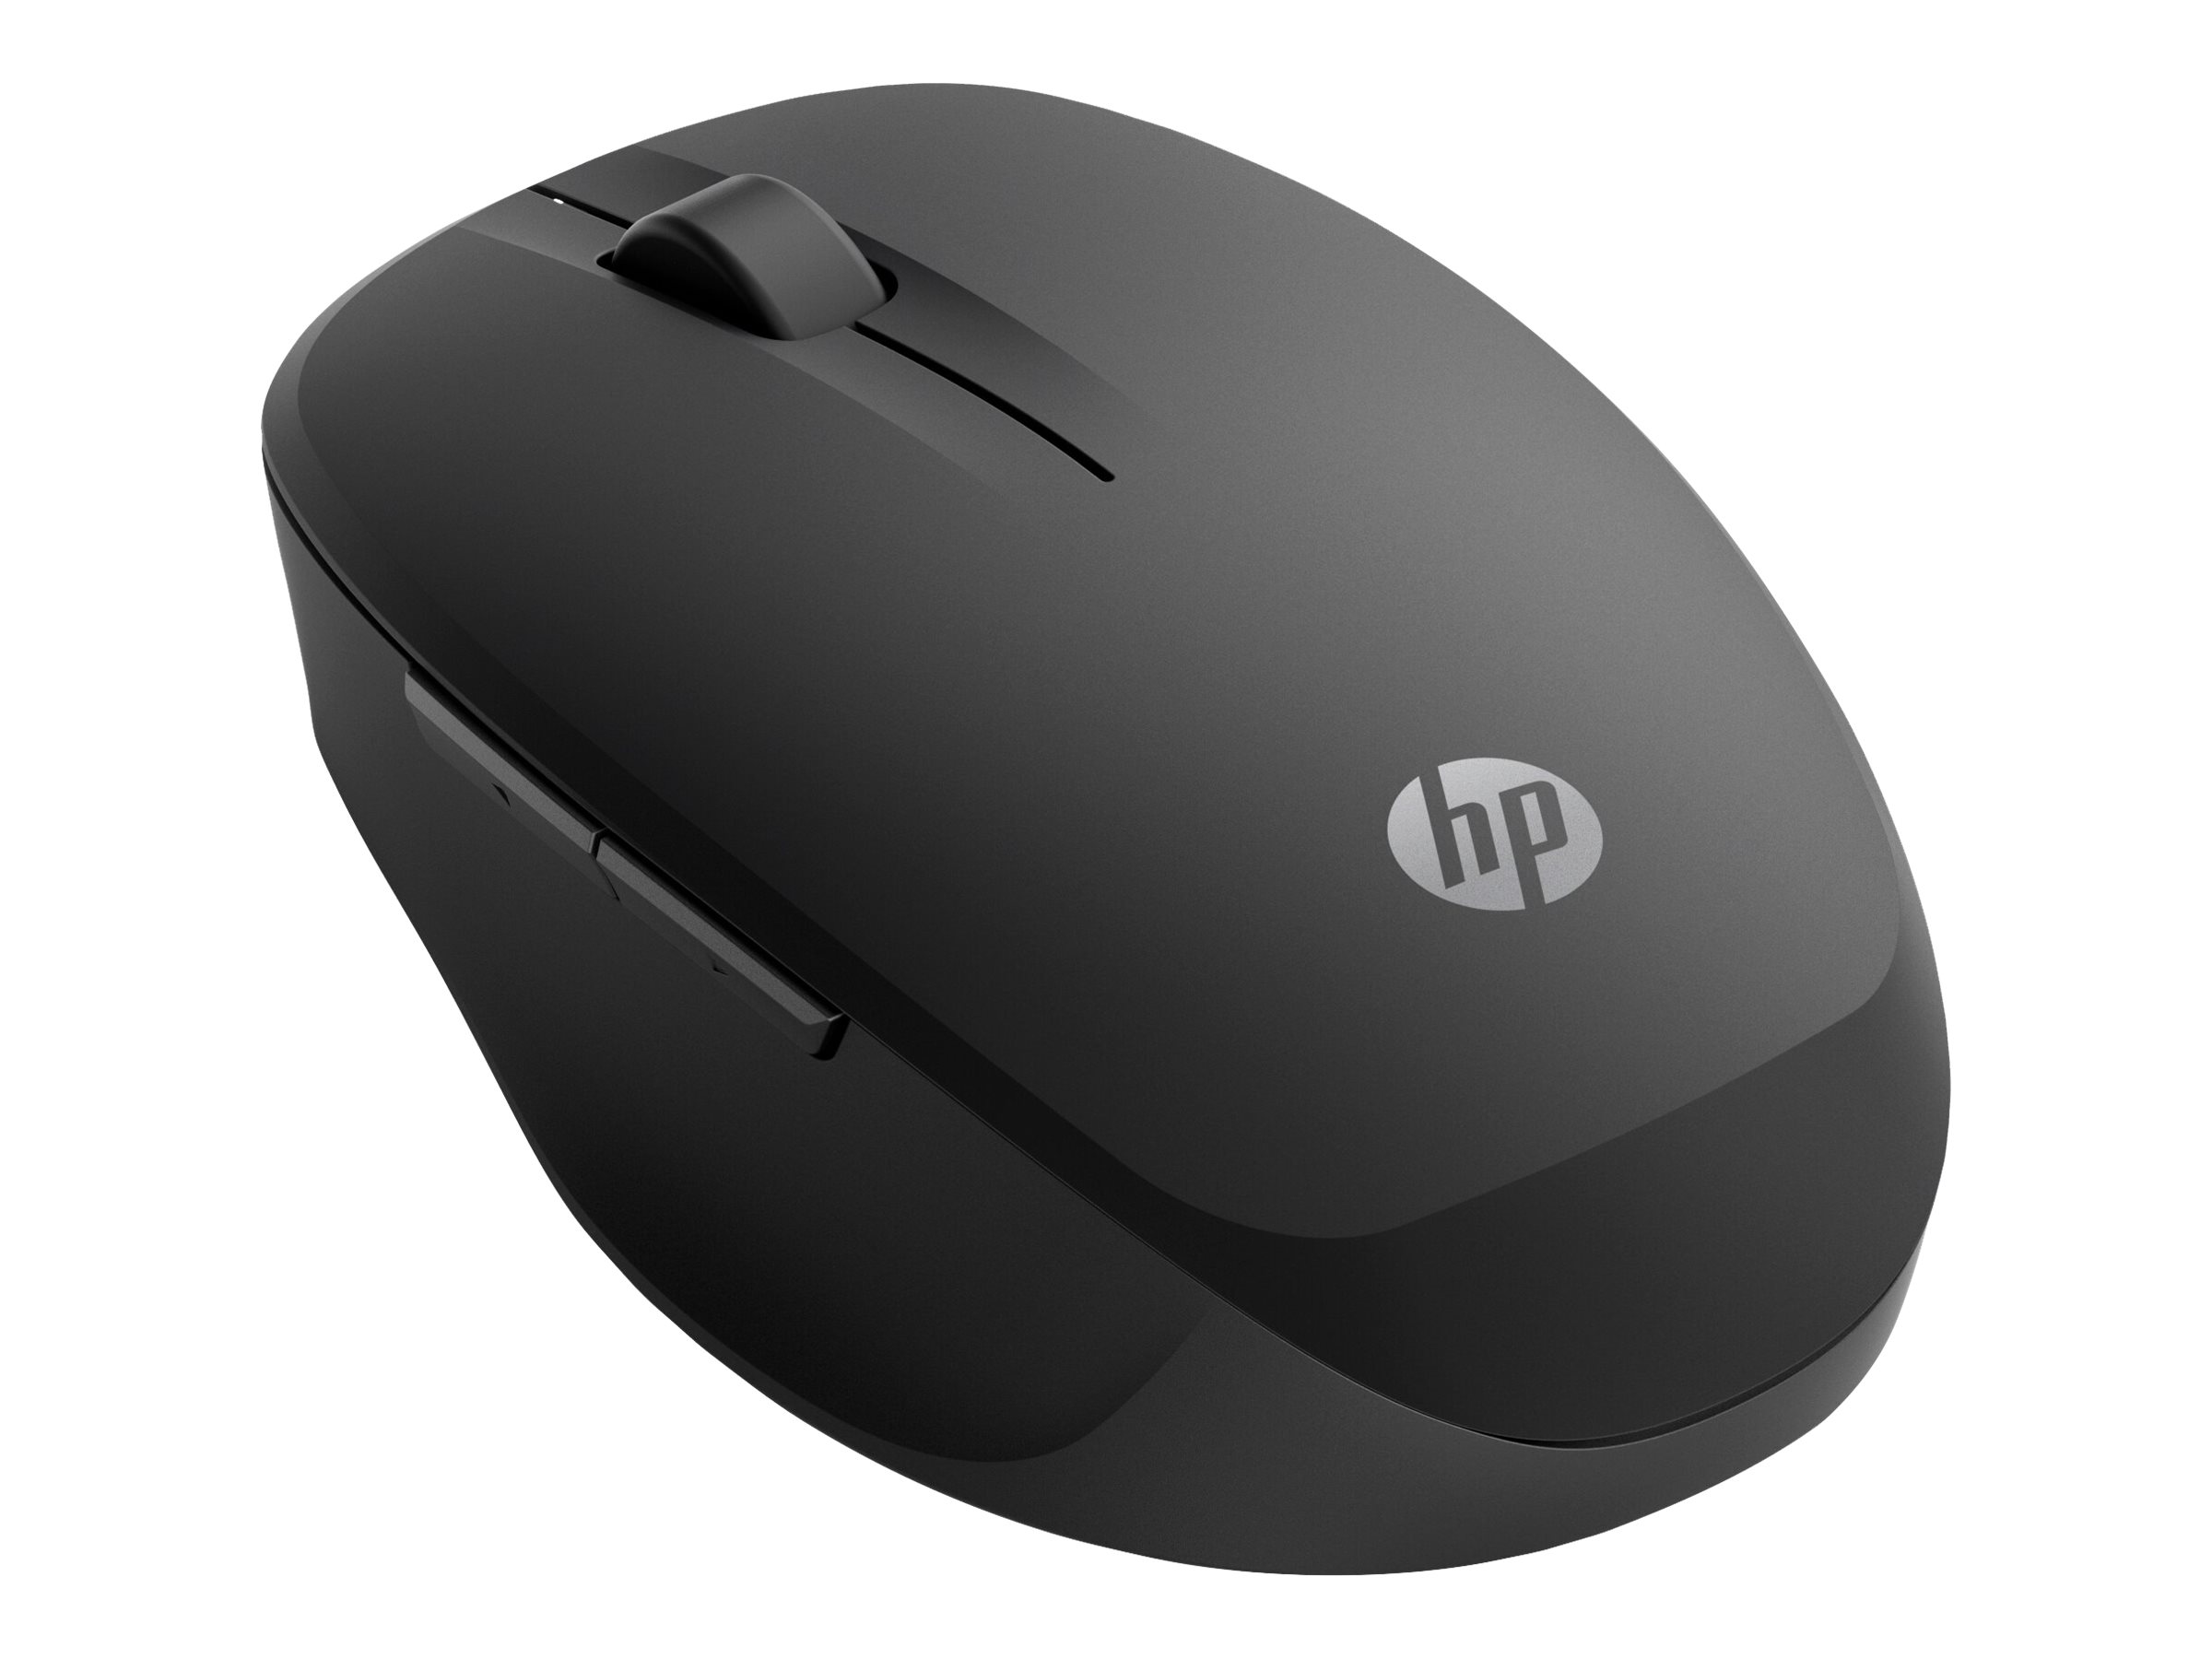 HP Dual Mode Black Mouse 300 EURO (P)